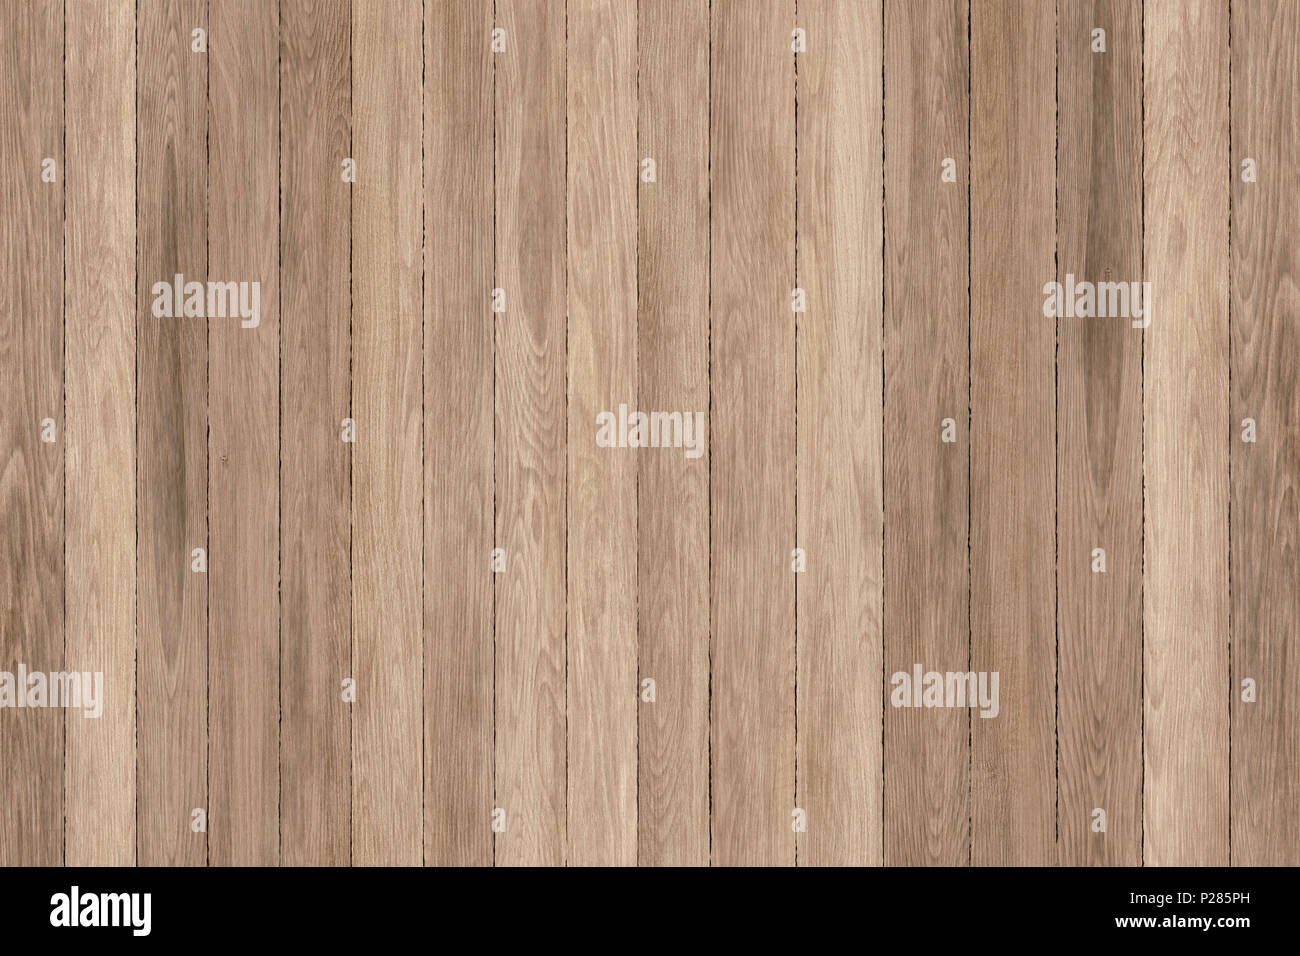 Light grunge wood panels. Planks Background. old wall wooden floor vintage Stock Photo